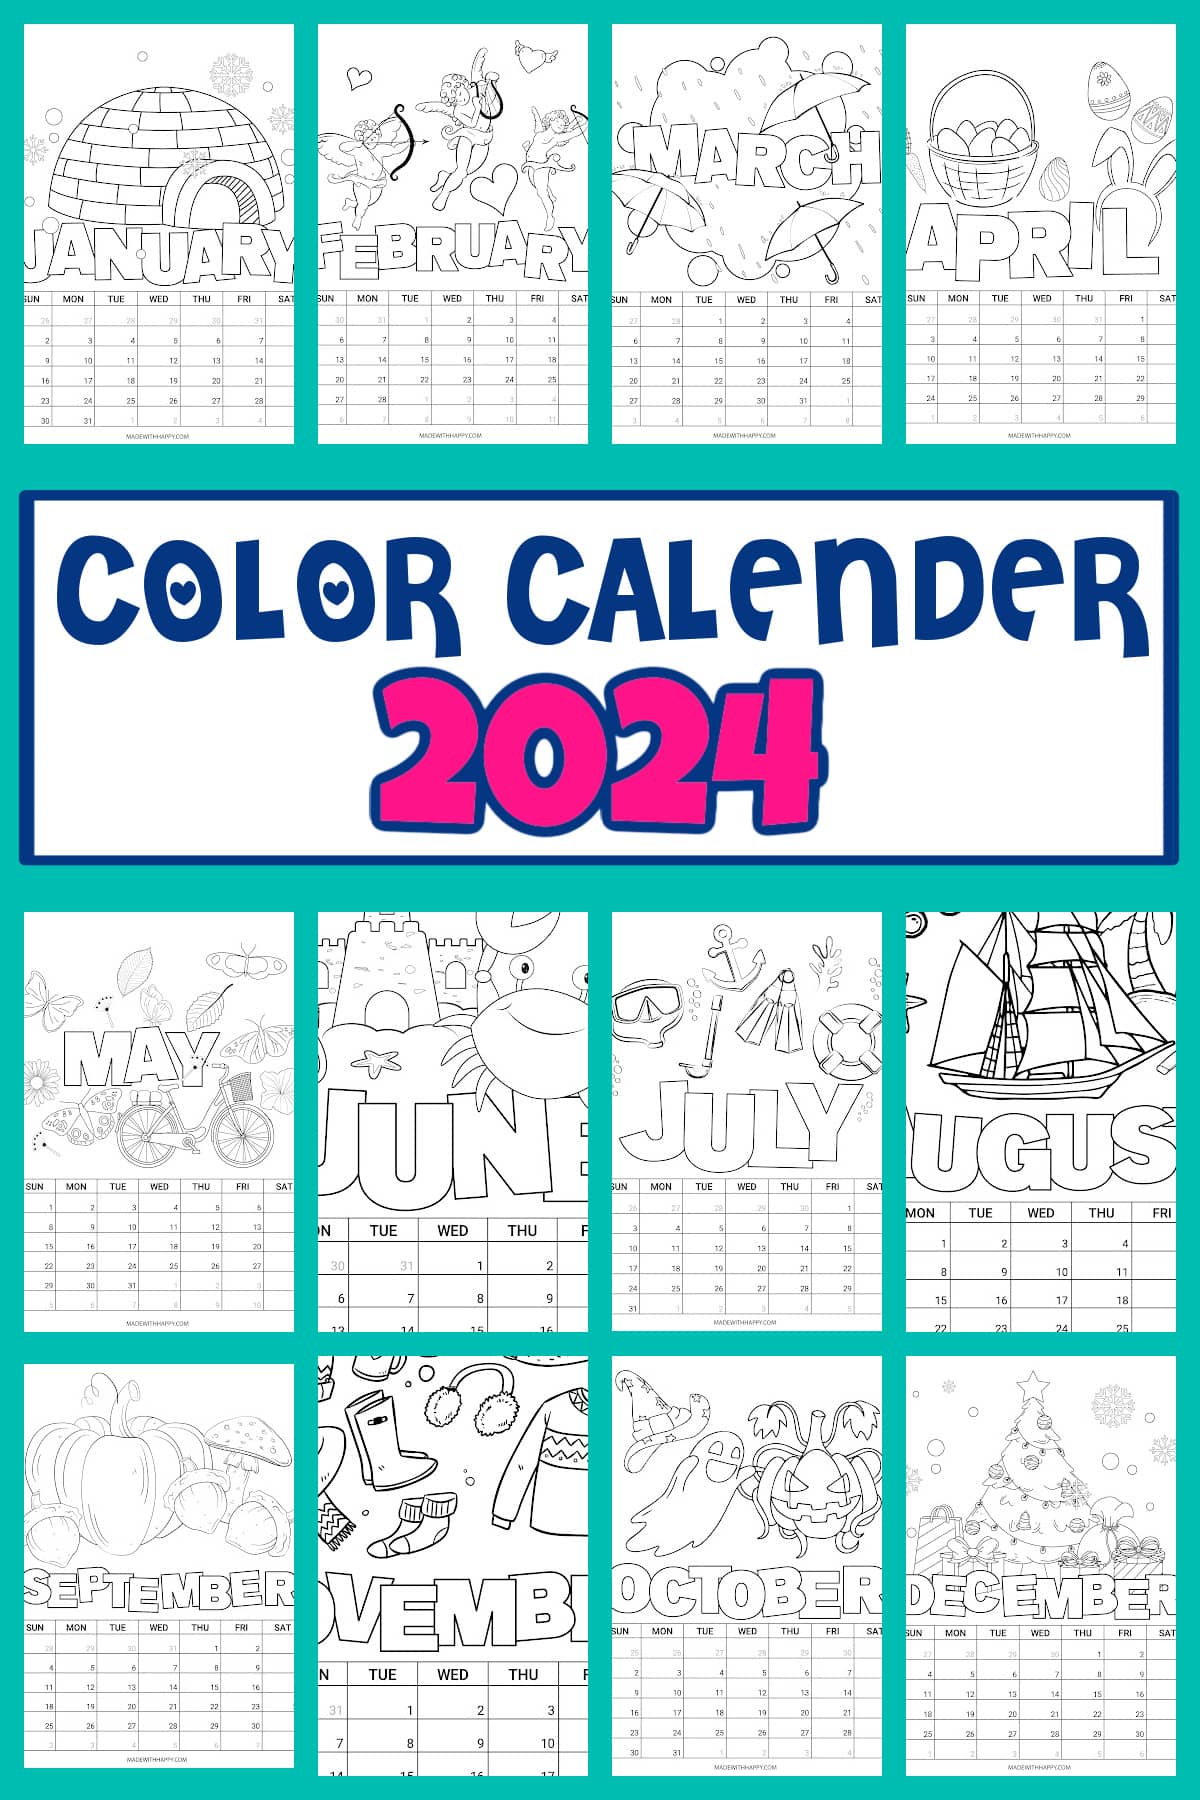 2024 Summer Calendar Colors Meaning Uiuc Fall 2024 Calendar